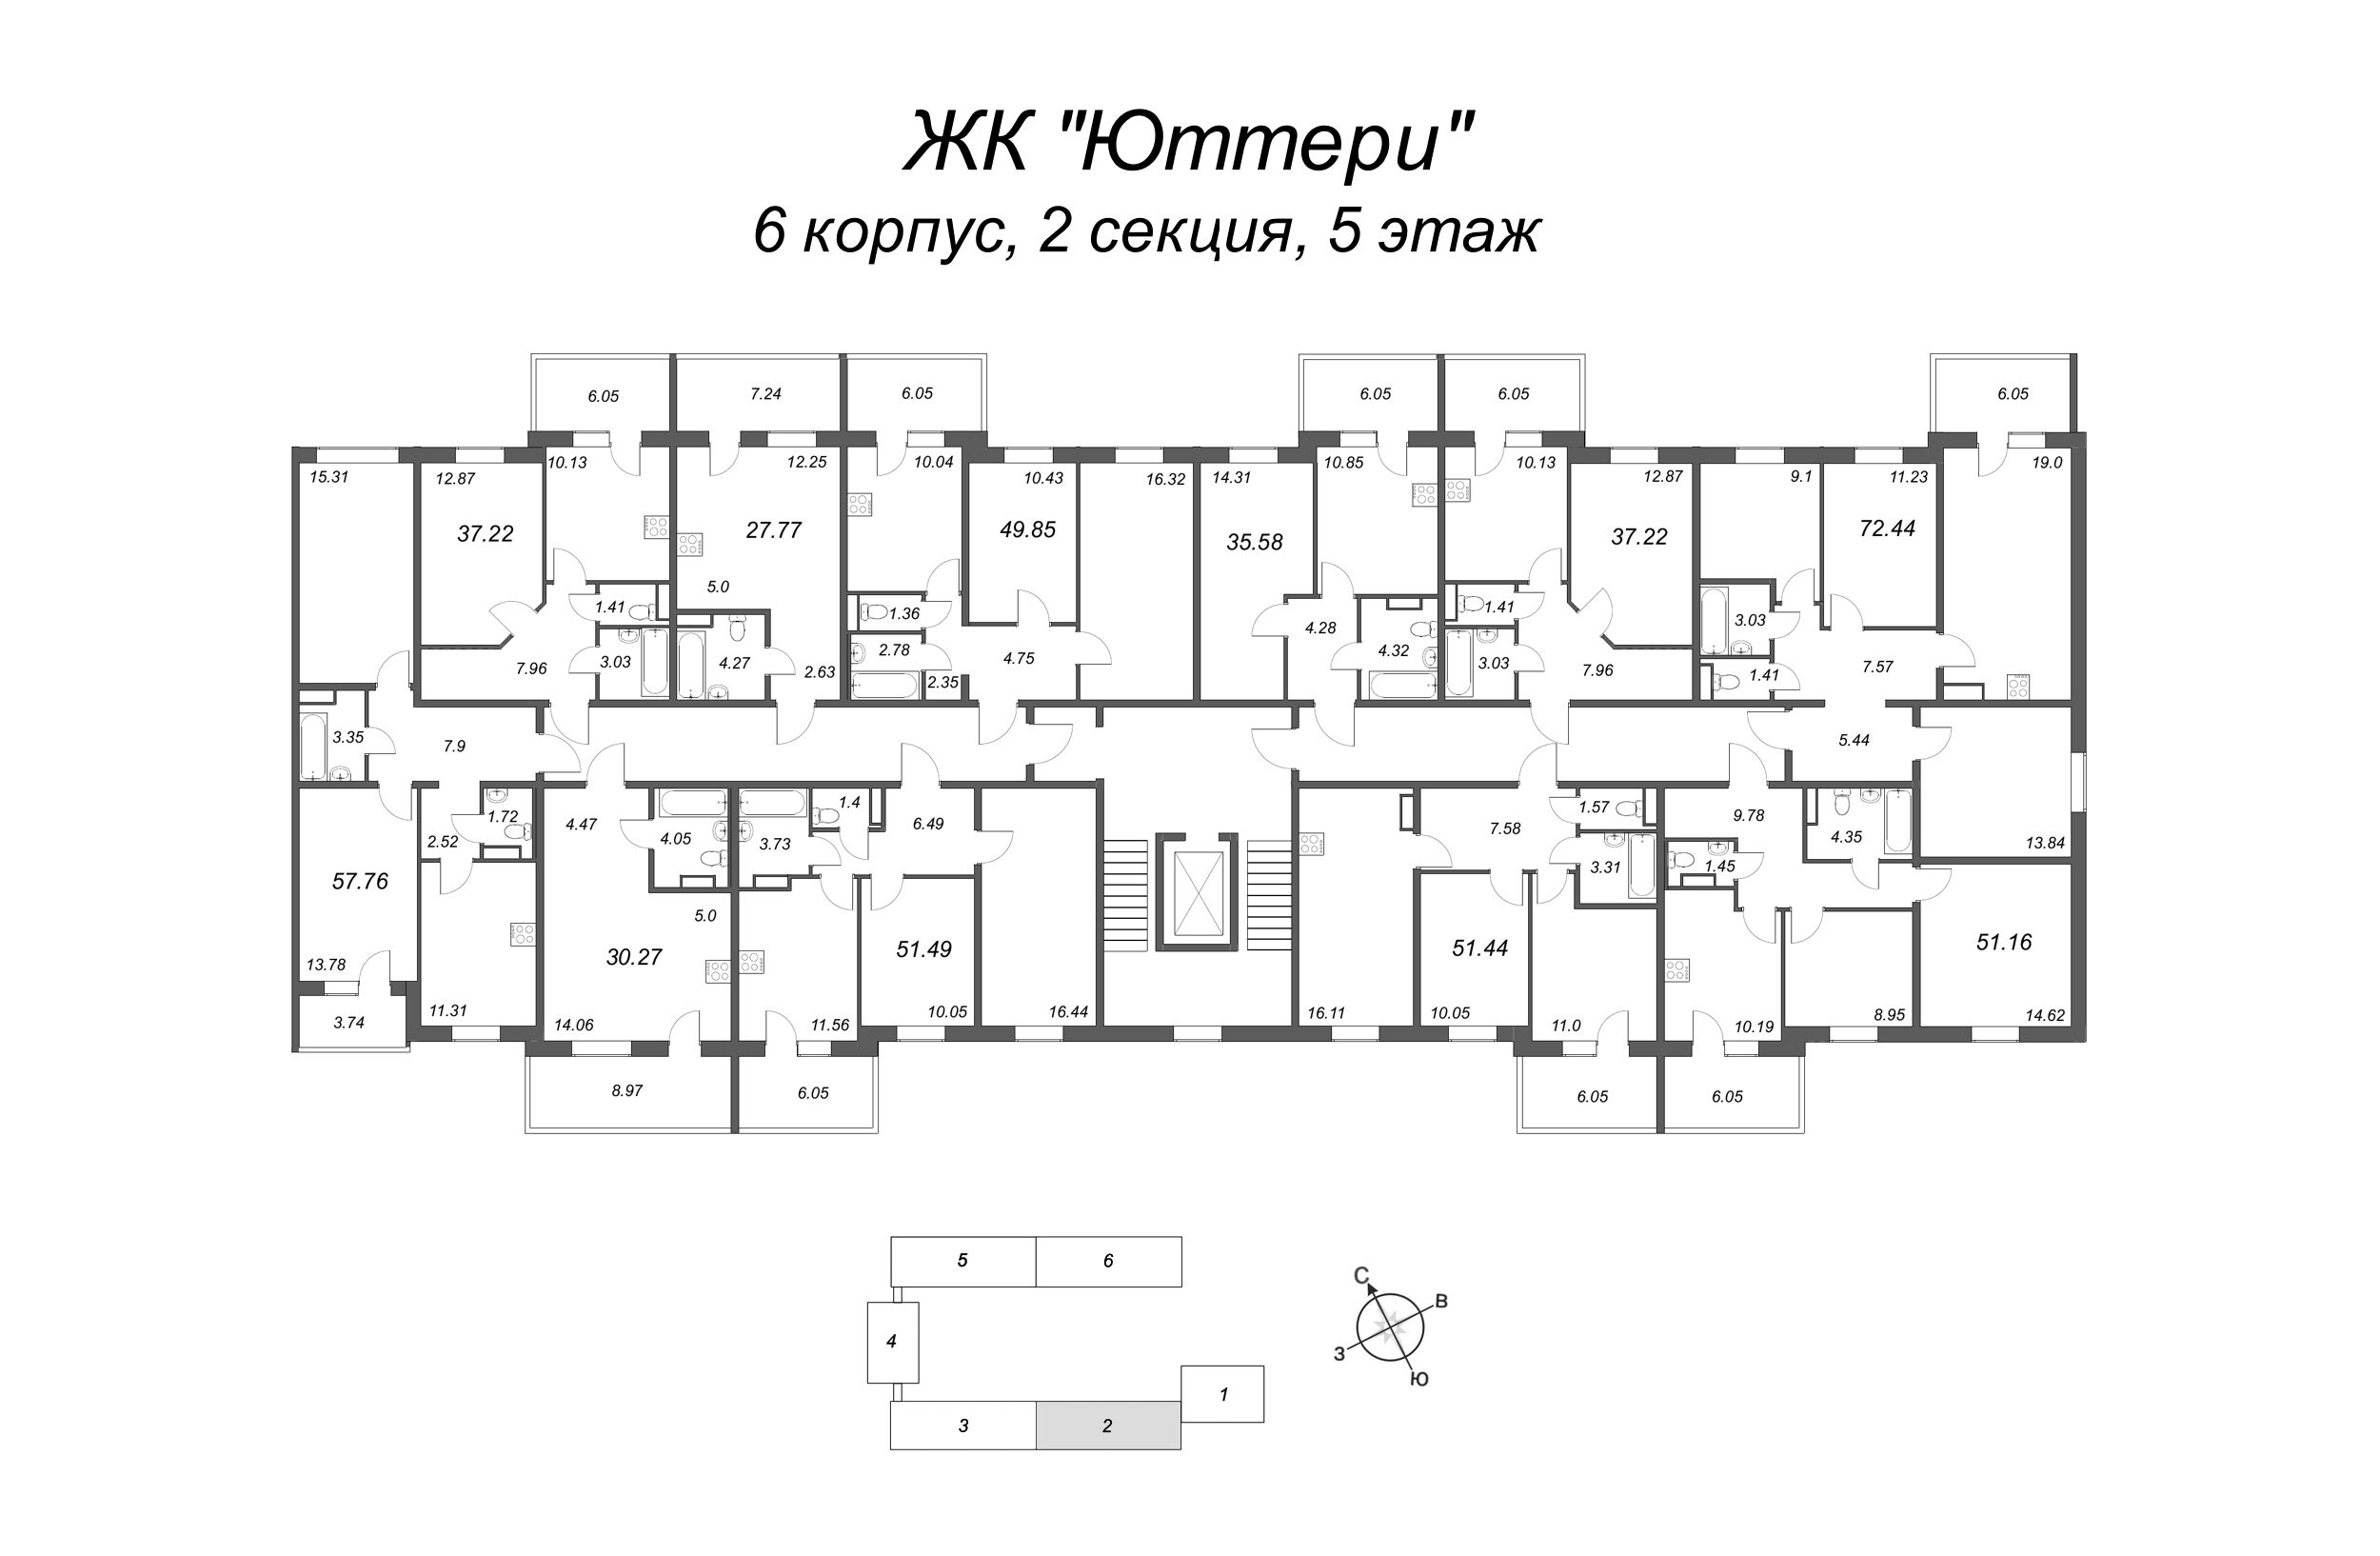 3-комнатная (Евро) квартира, 49.62 м² - планировка этажа